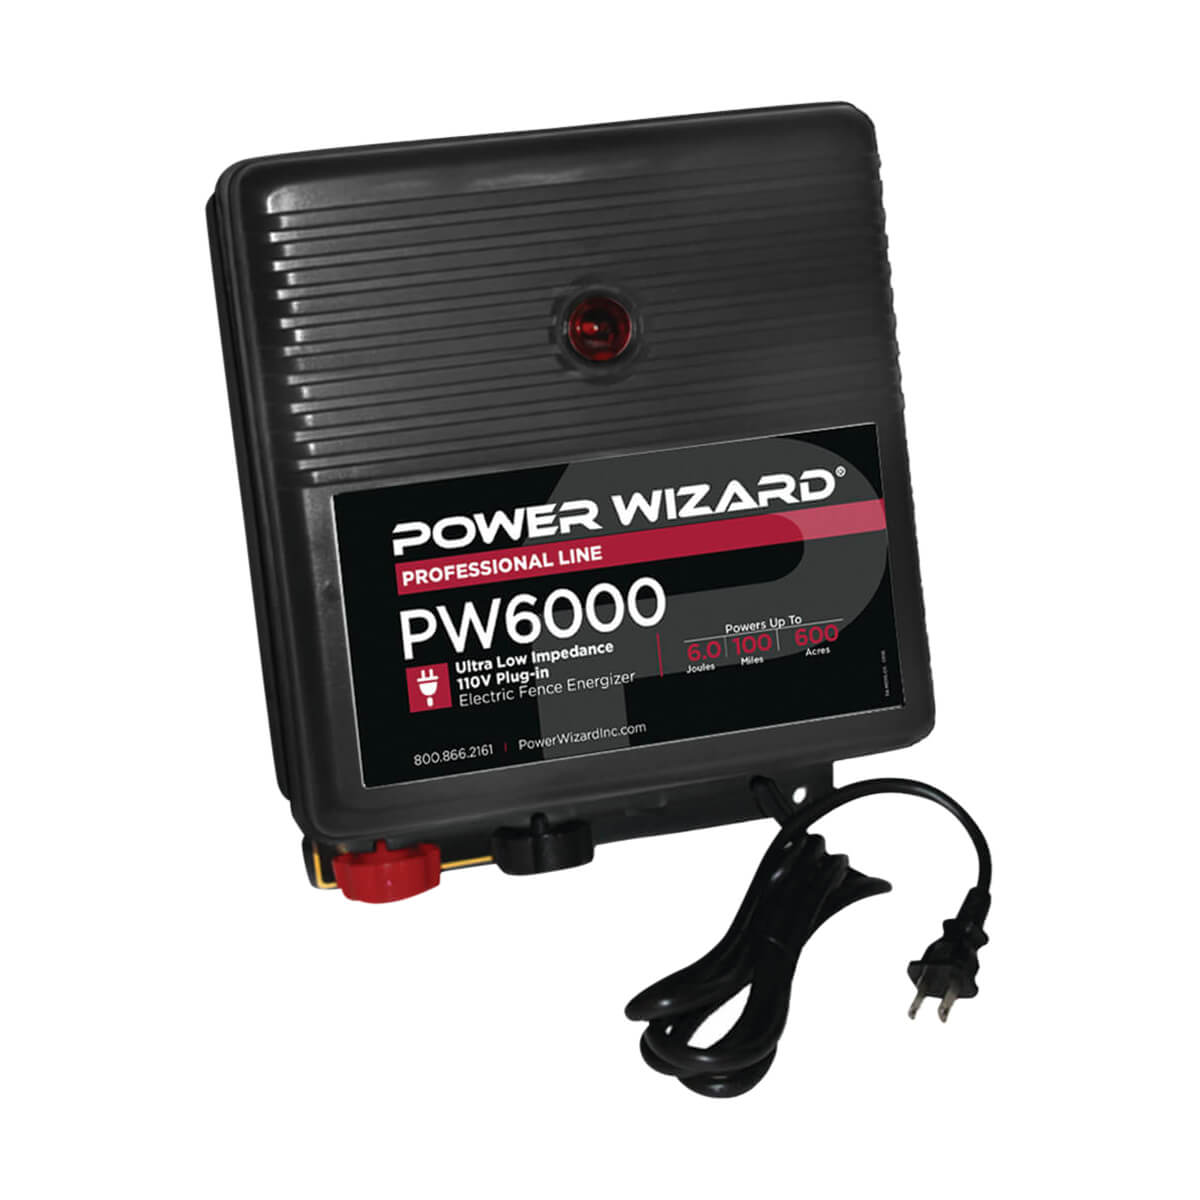 Power Wizard 110V Plug-in Energizer